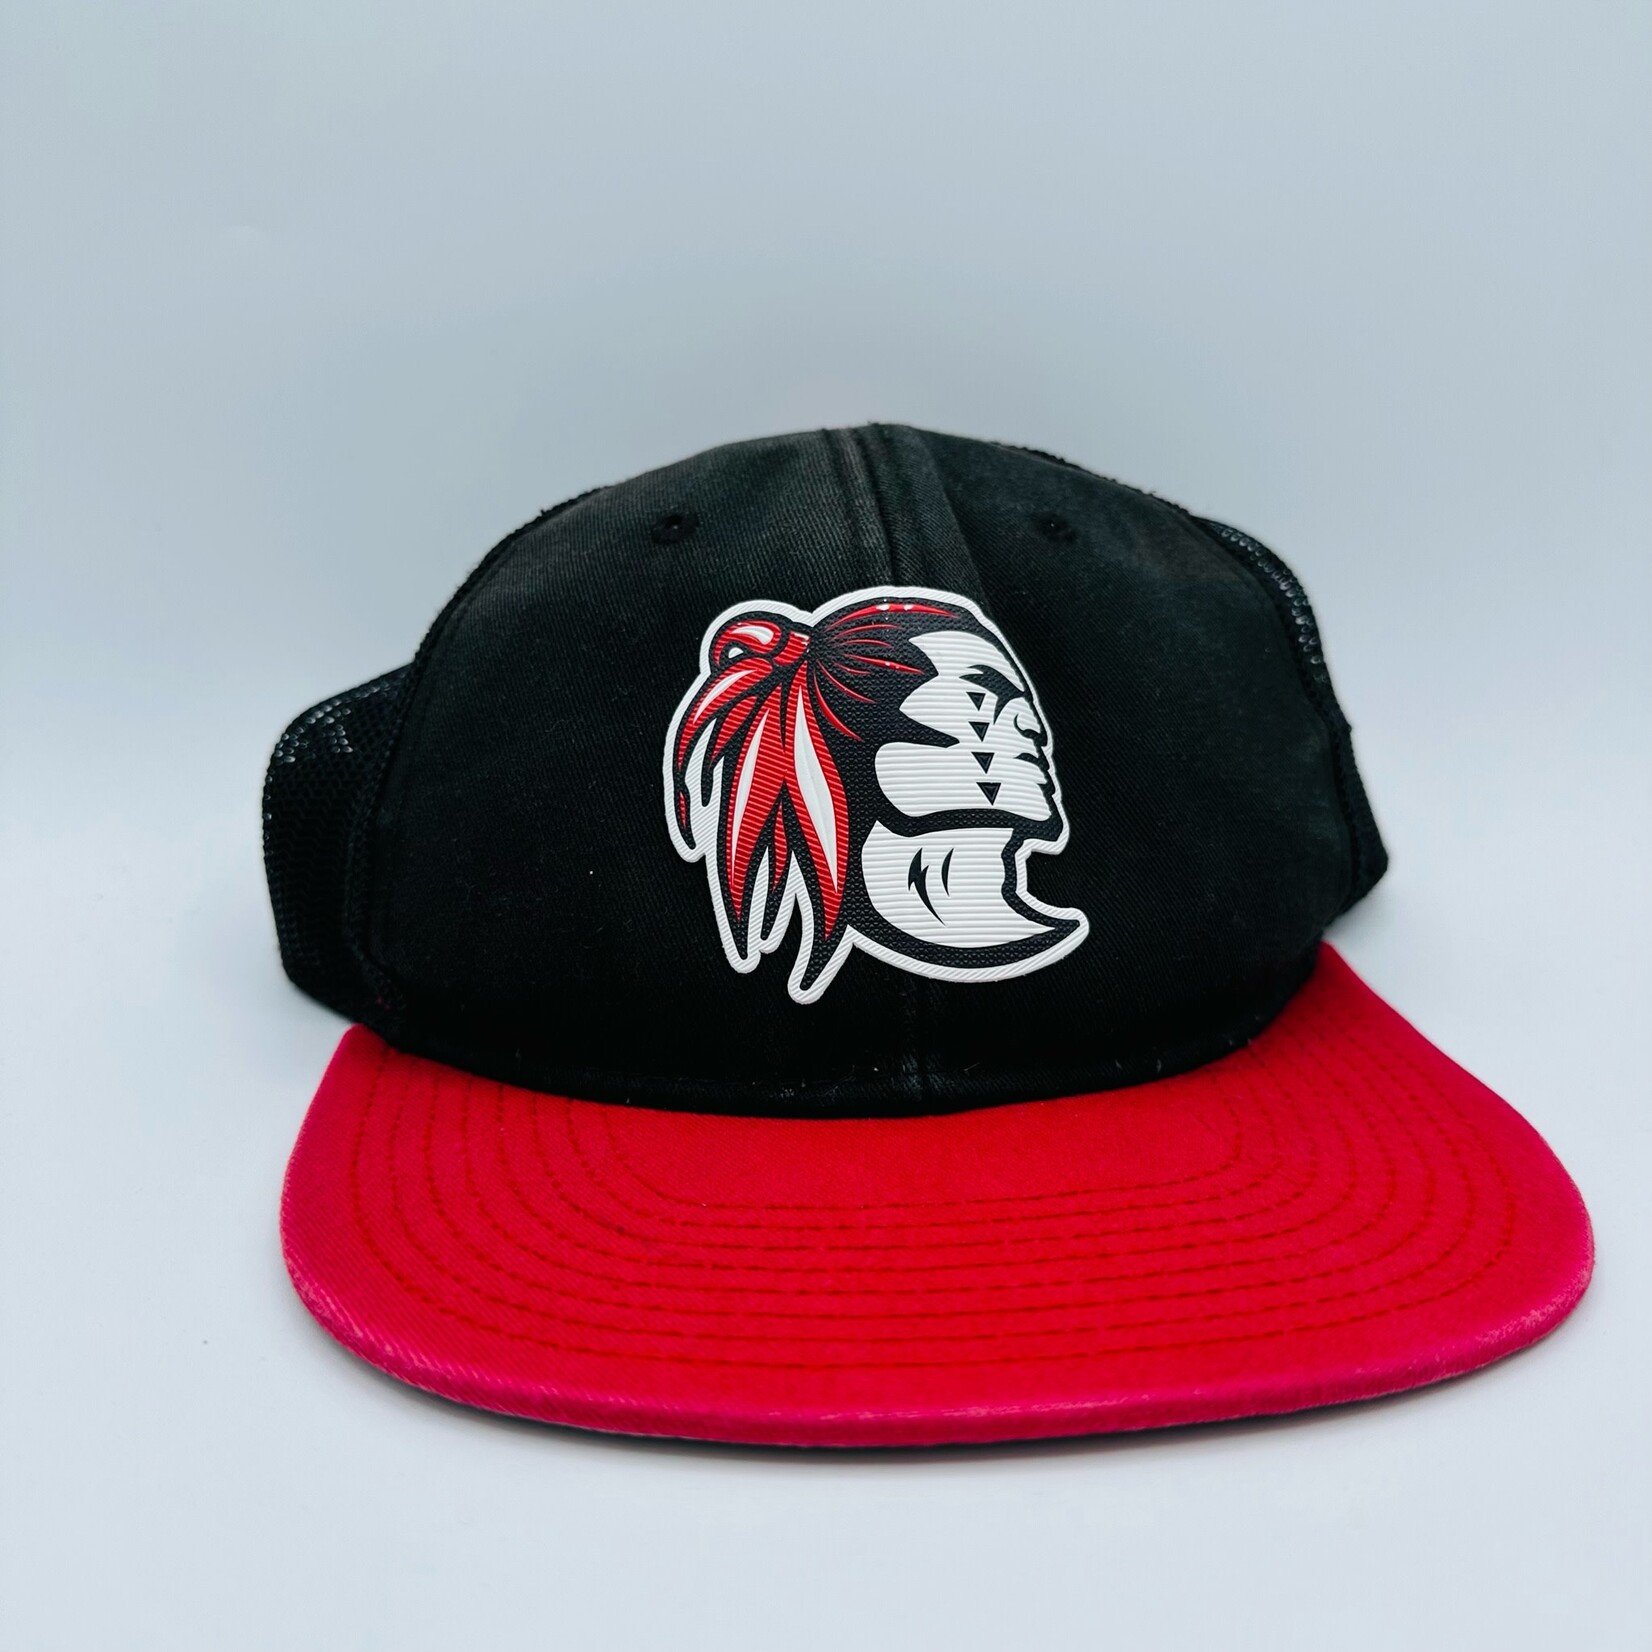 Mission Zero Reloved Otto Hat Red/Black